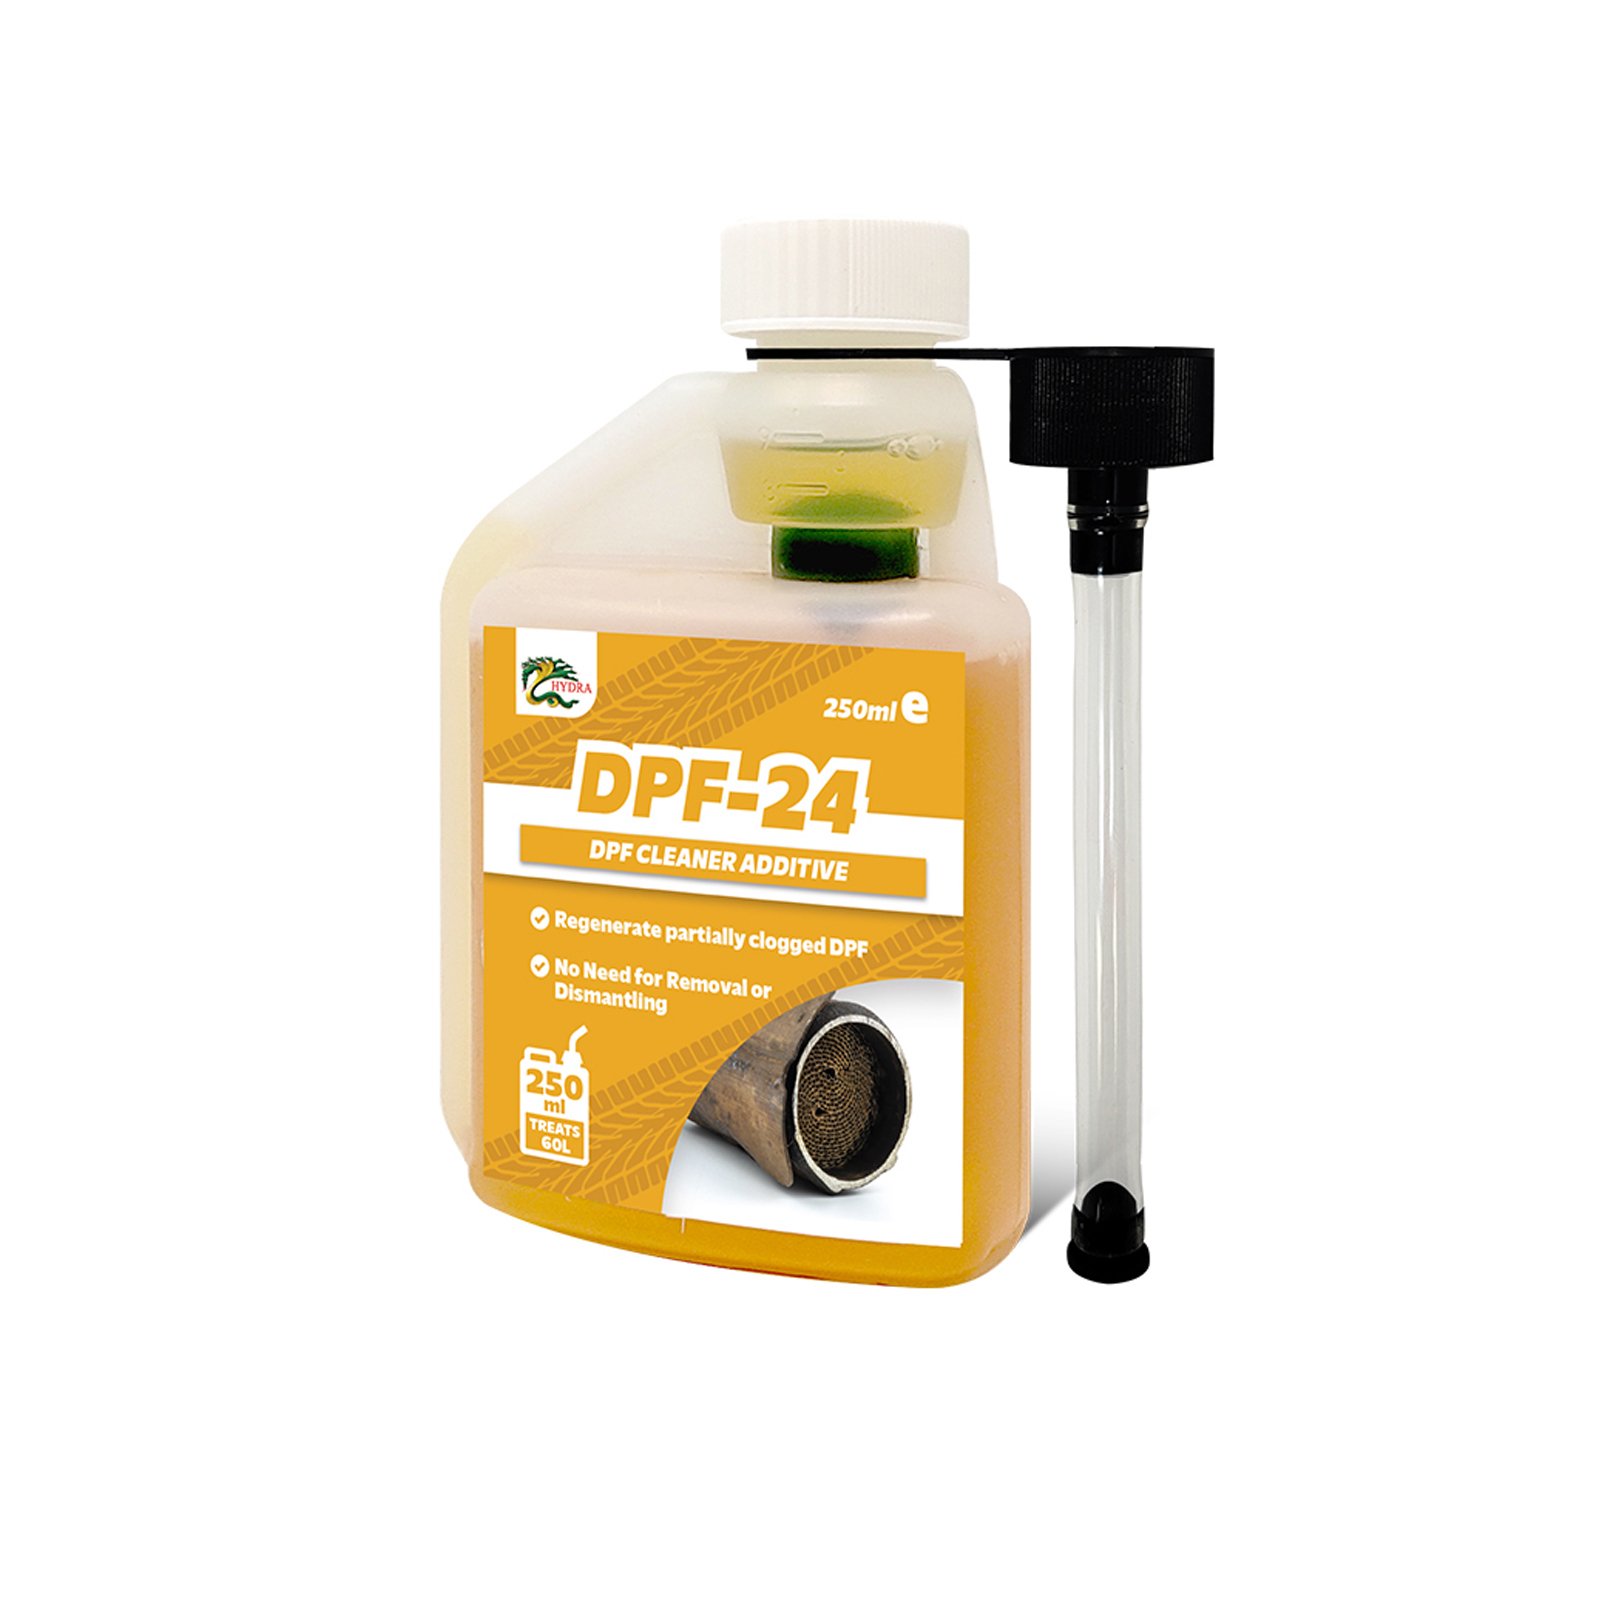  RESURS DIESEL 150 g. Diesel Oil Additive For Cars